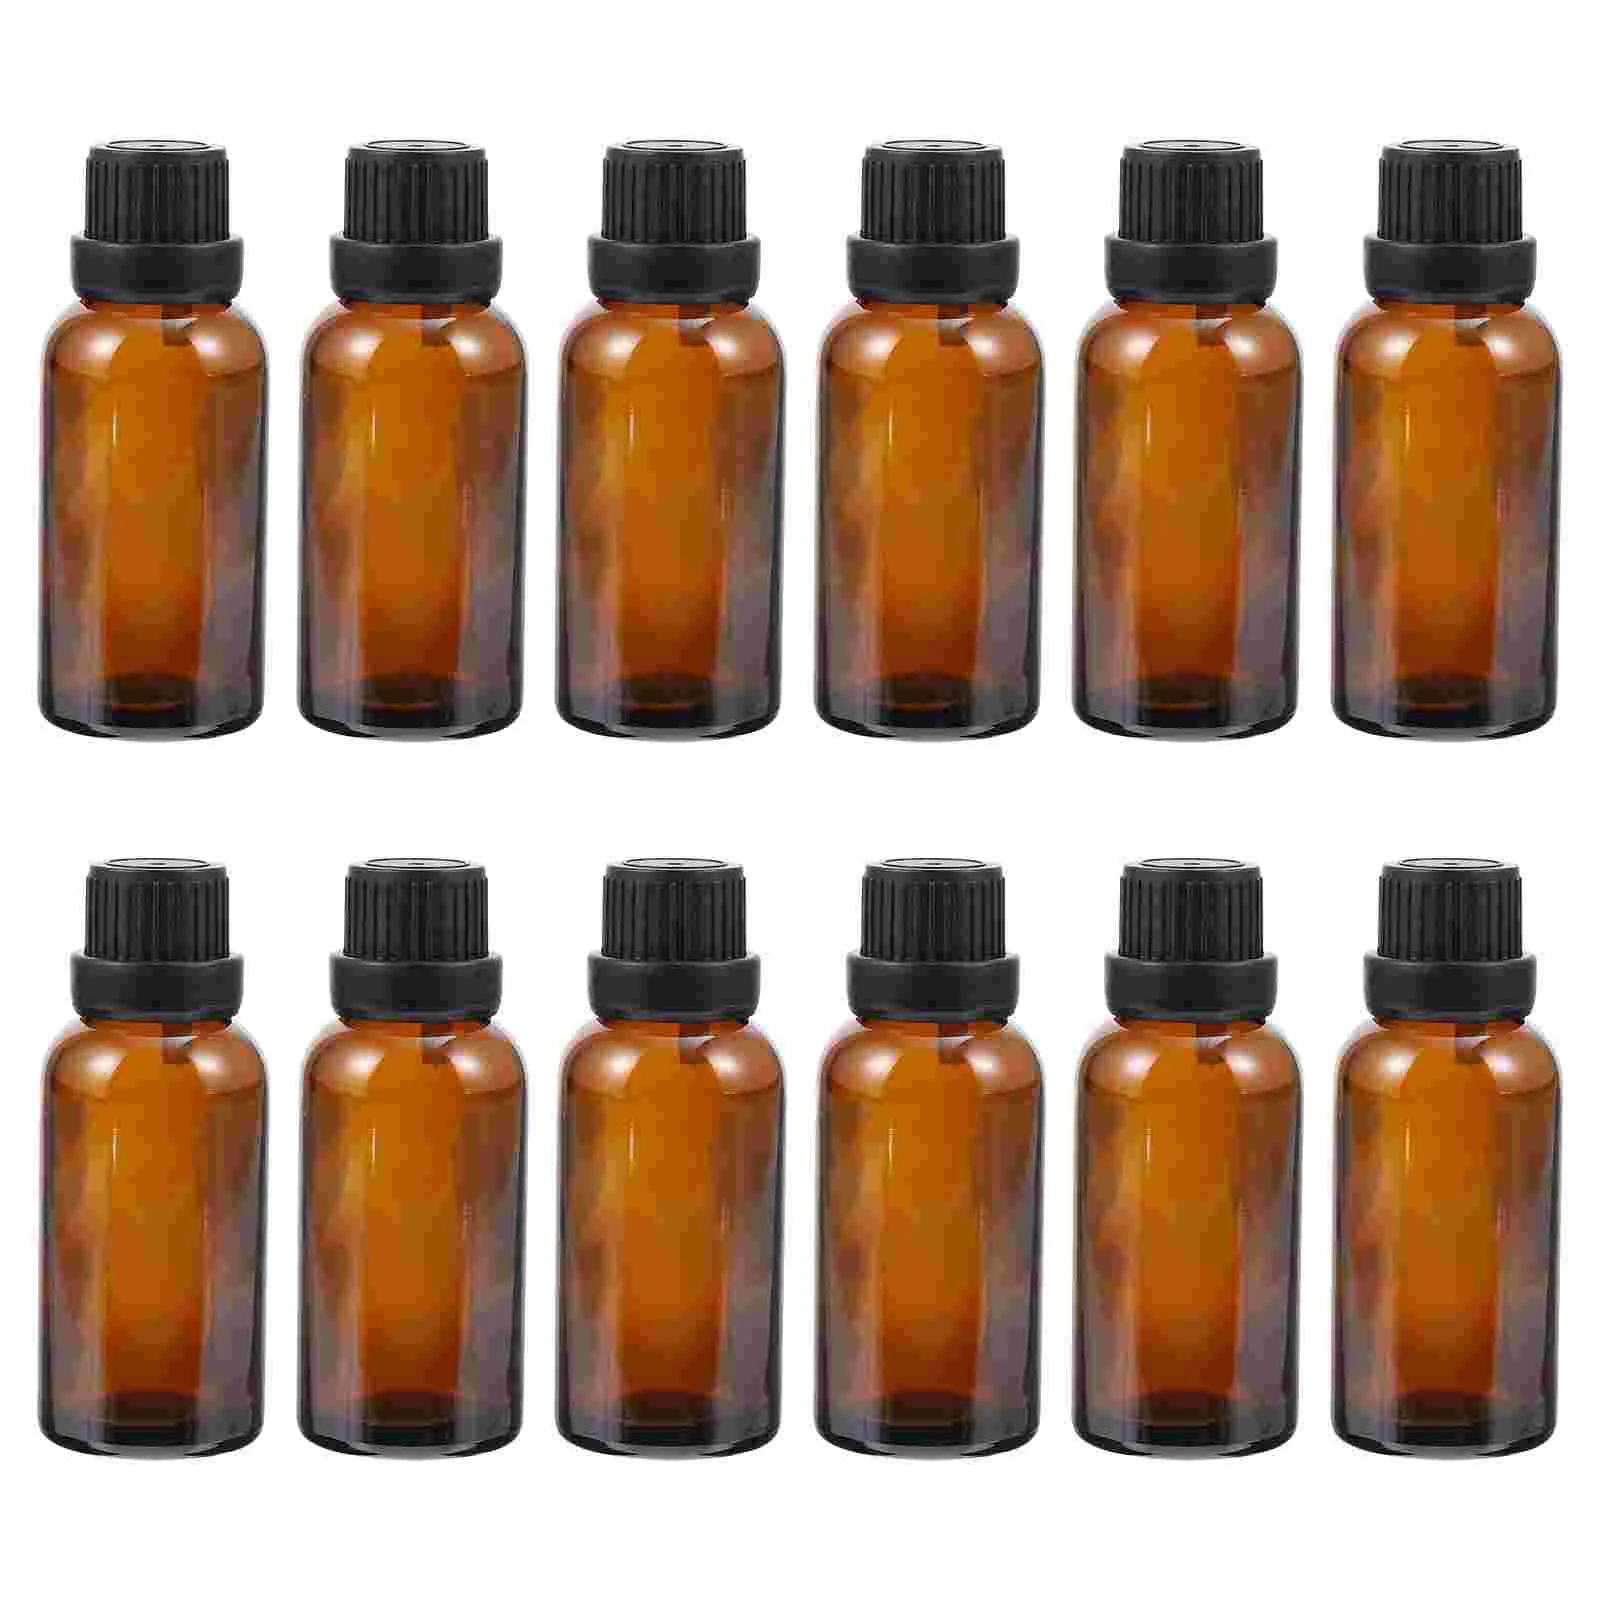 

Bottles Essential Oil Bottle Empty Amber Refillable Oils Sample Vials Mini Container Caps Sets Lotion Storage Clear Vial Lids